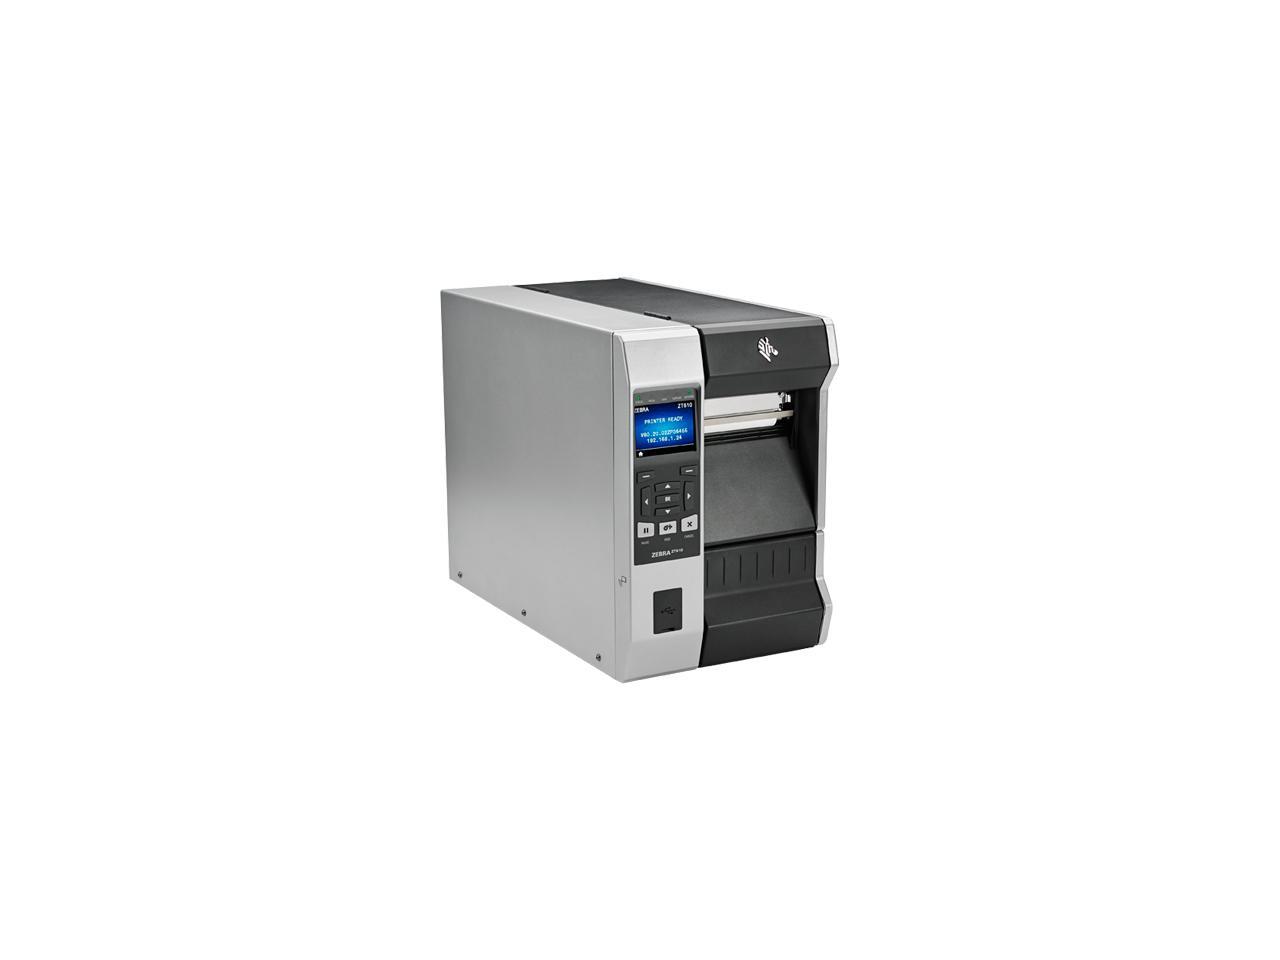 Zebra Zt610 4 Thermal Transfer Label Printer With Color Screen 2432